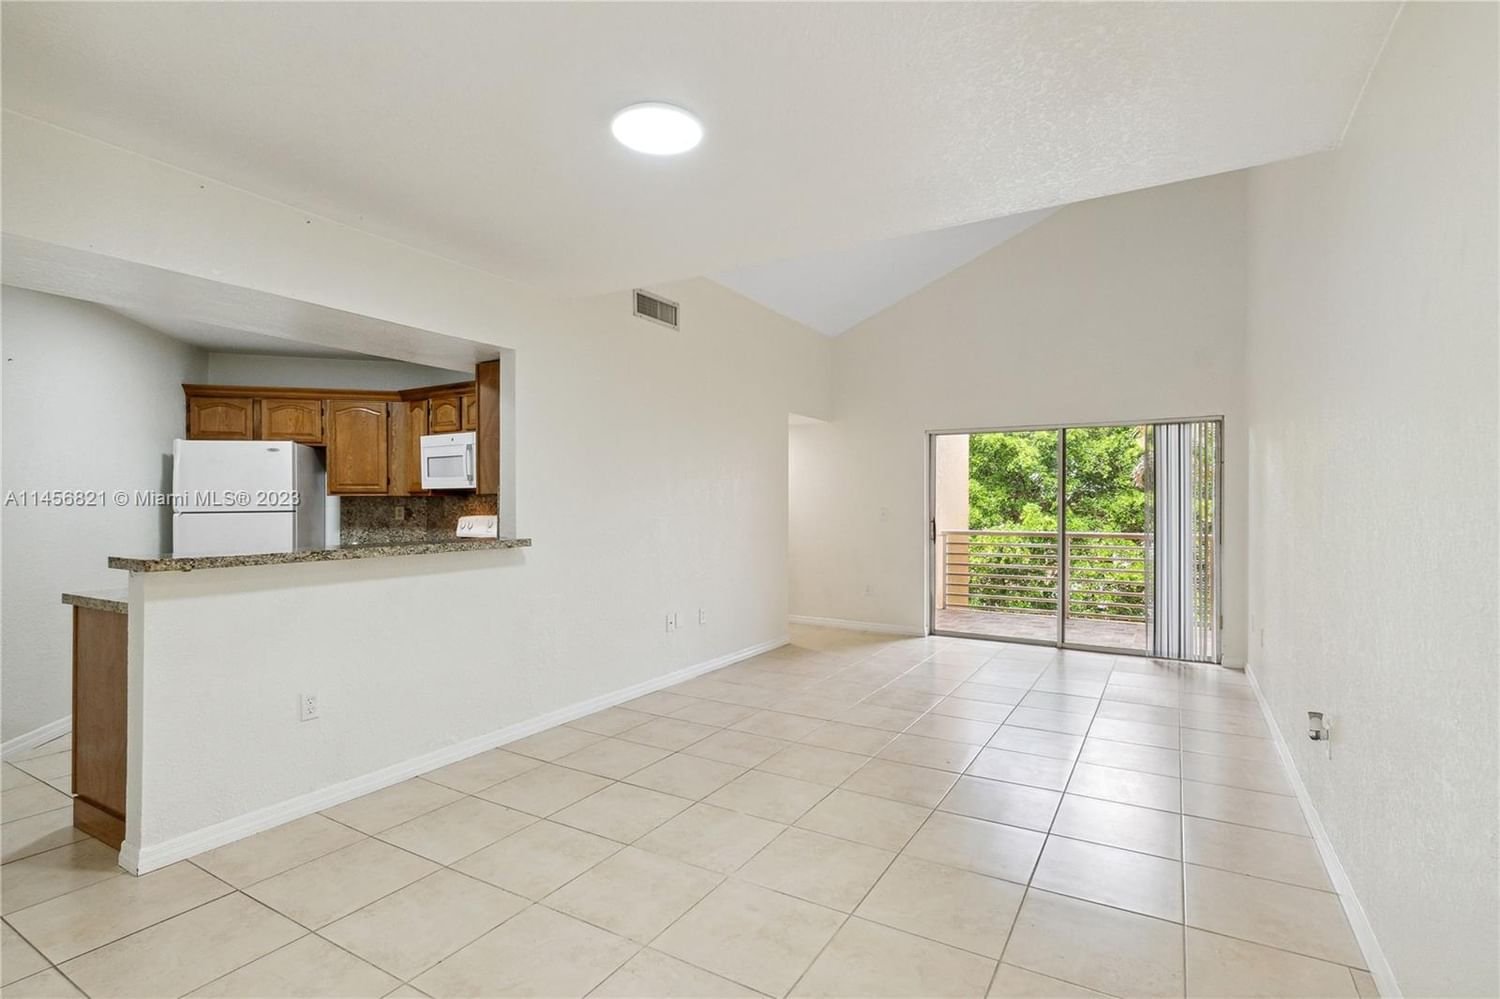 Real estate property located at 9731 Fontainebleau Blvd F309, Miami-Dade County, Miami, FL